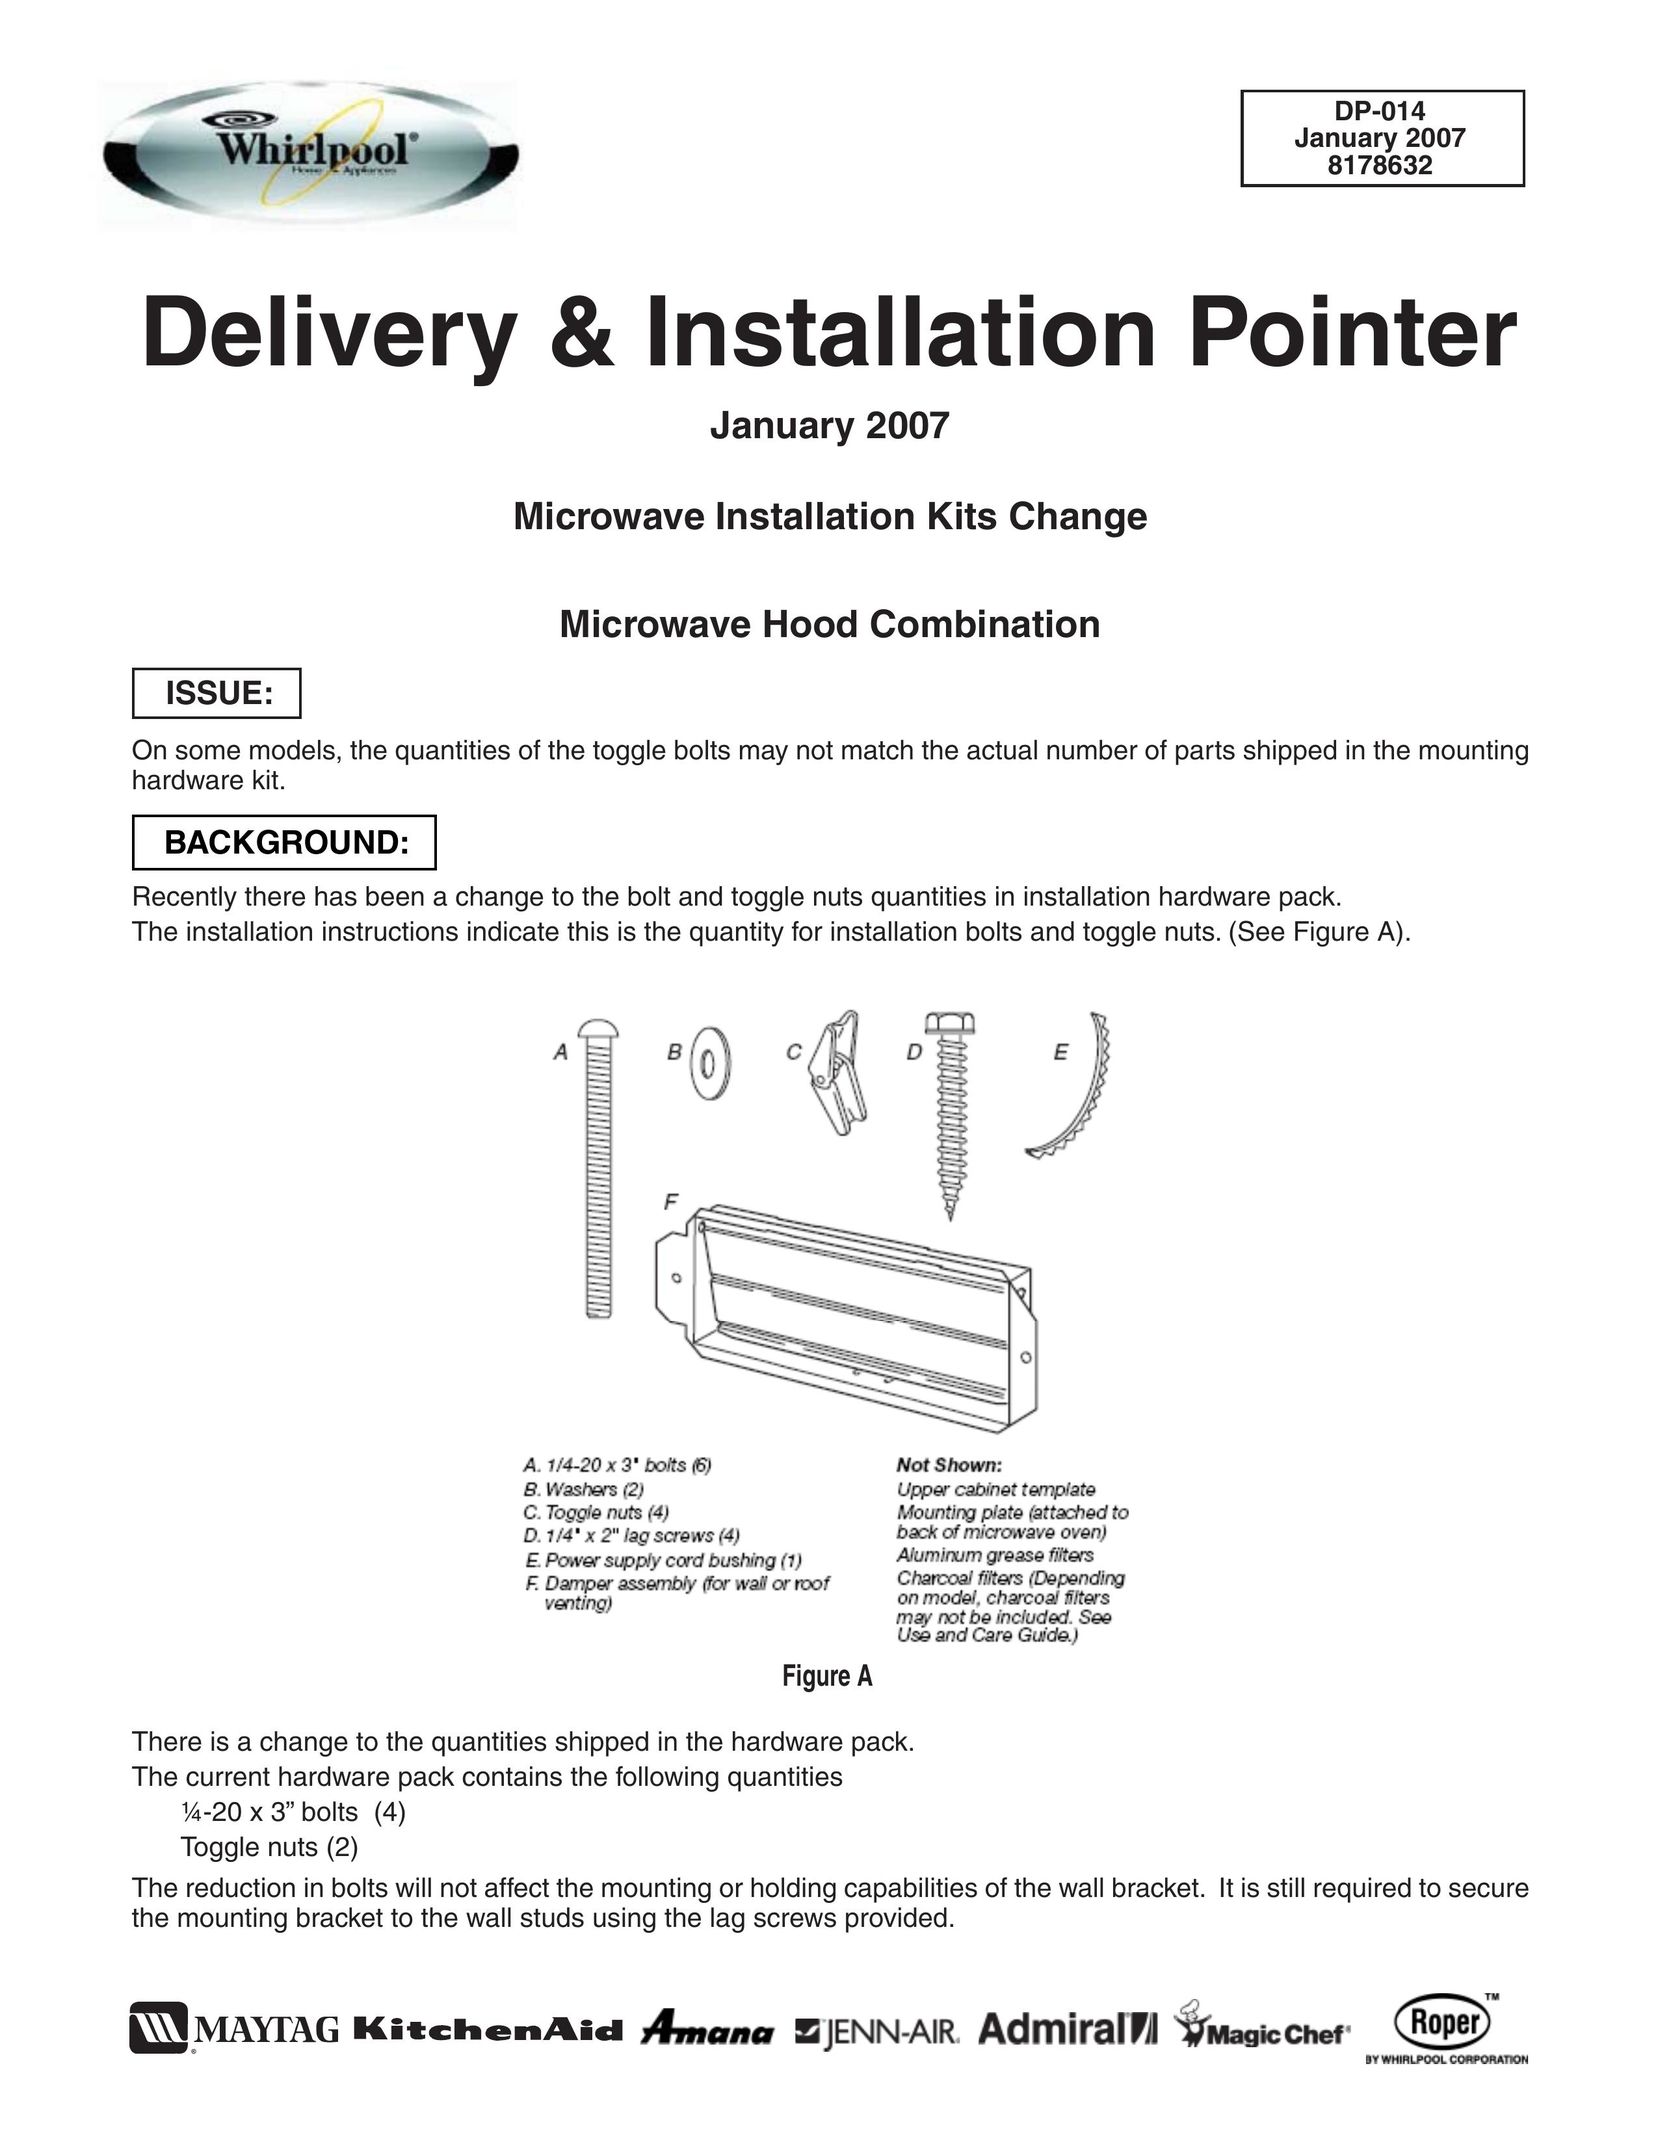 Whirlpool DP-014 Microwave Oven User Manual